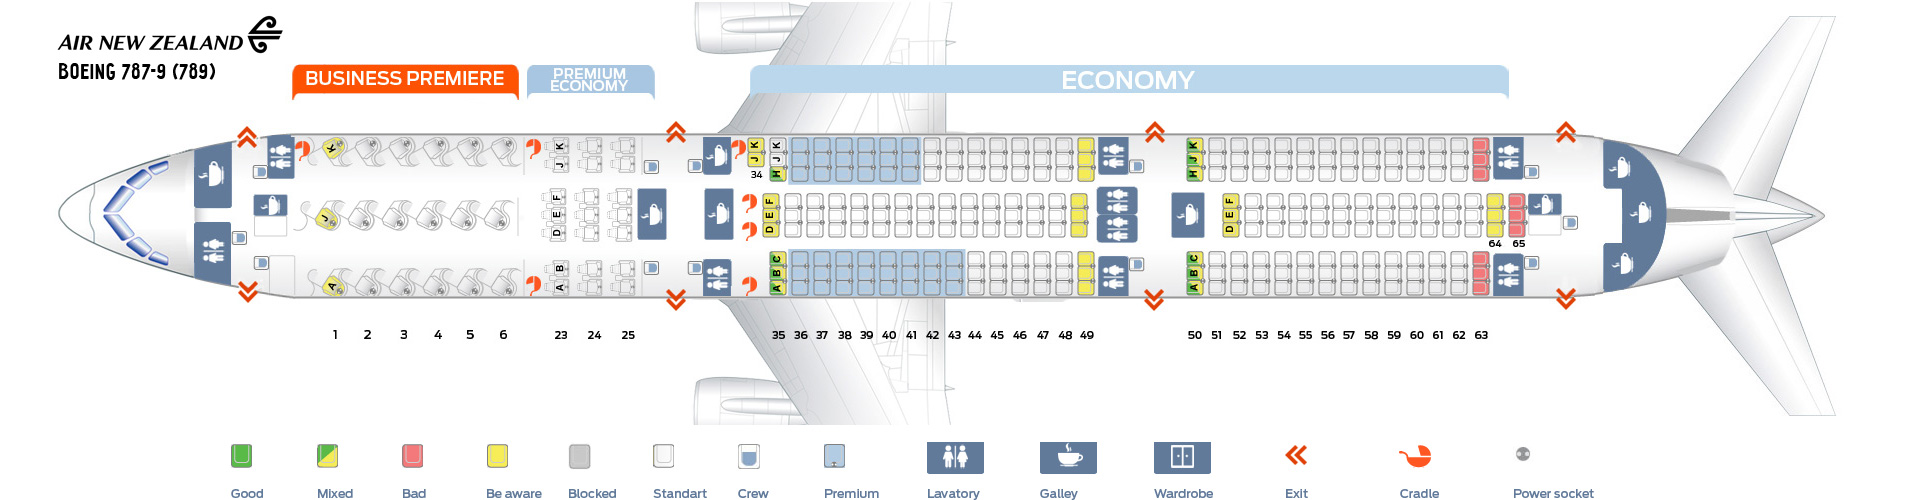 Seat Map Boeing 787 9 Dreamliner Air New Zealand Best Seats